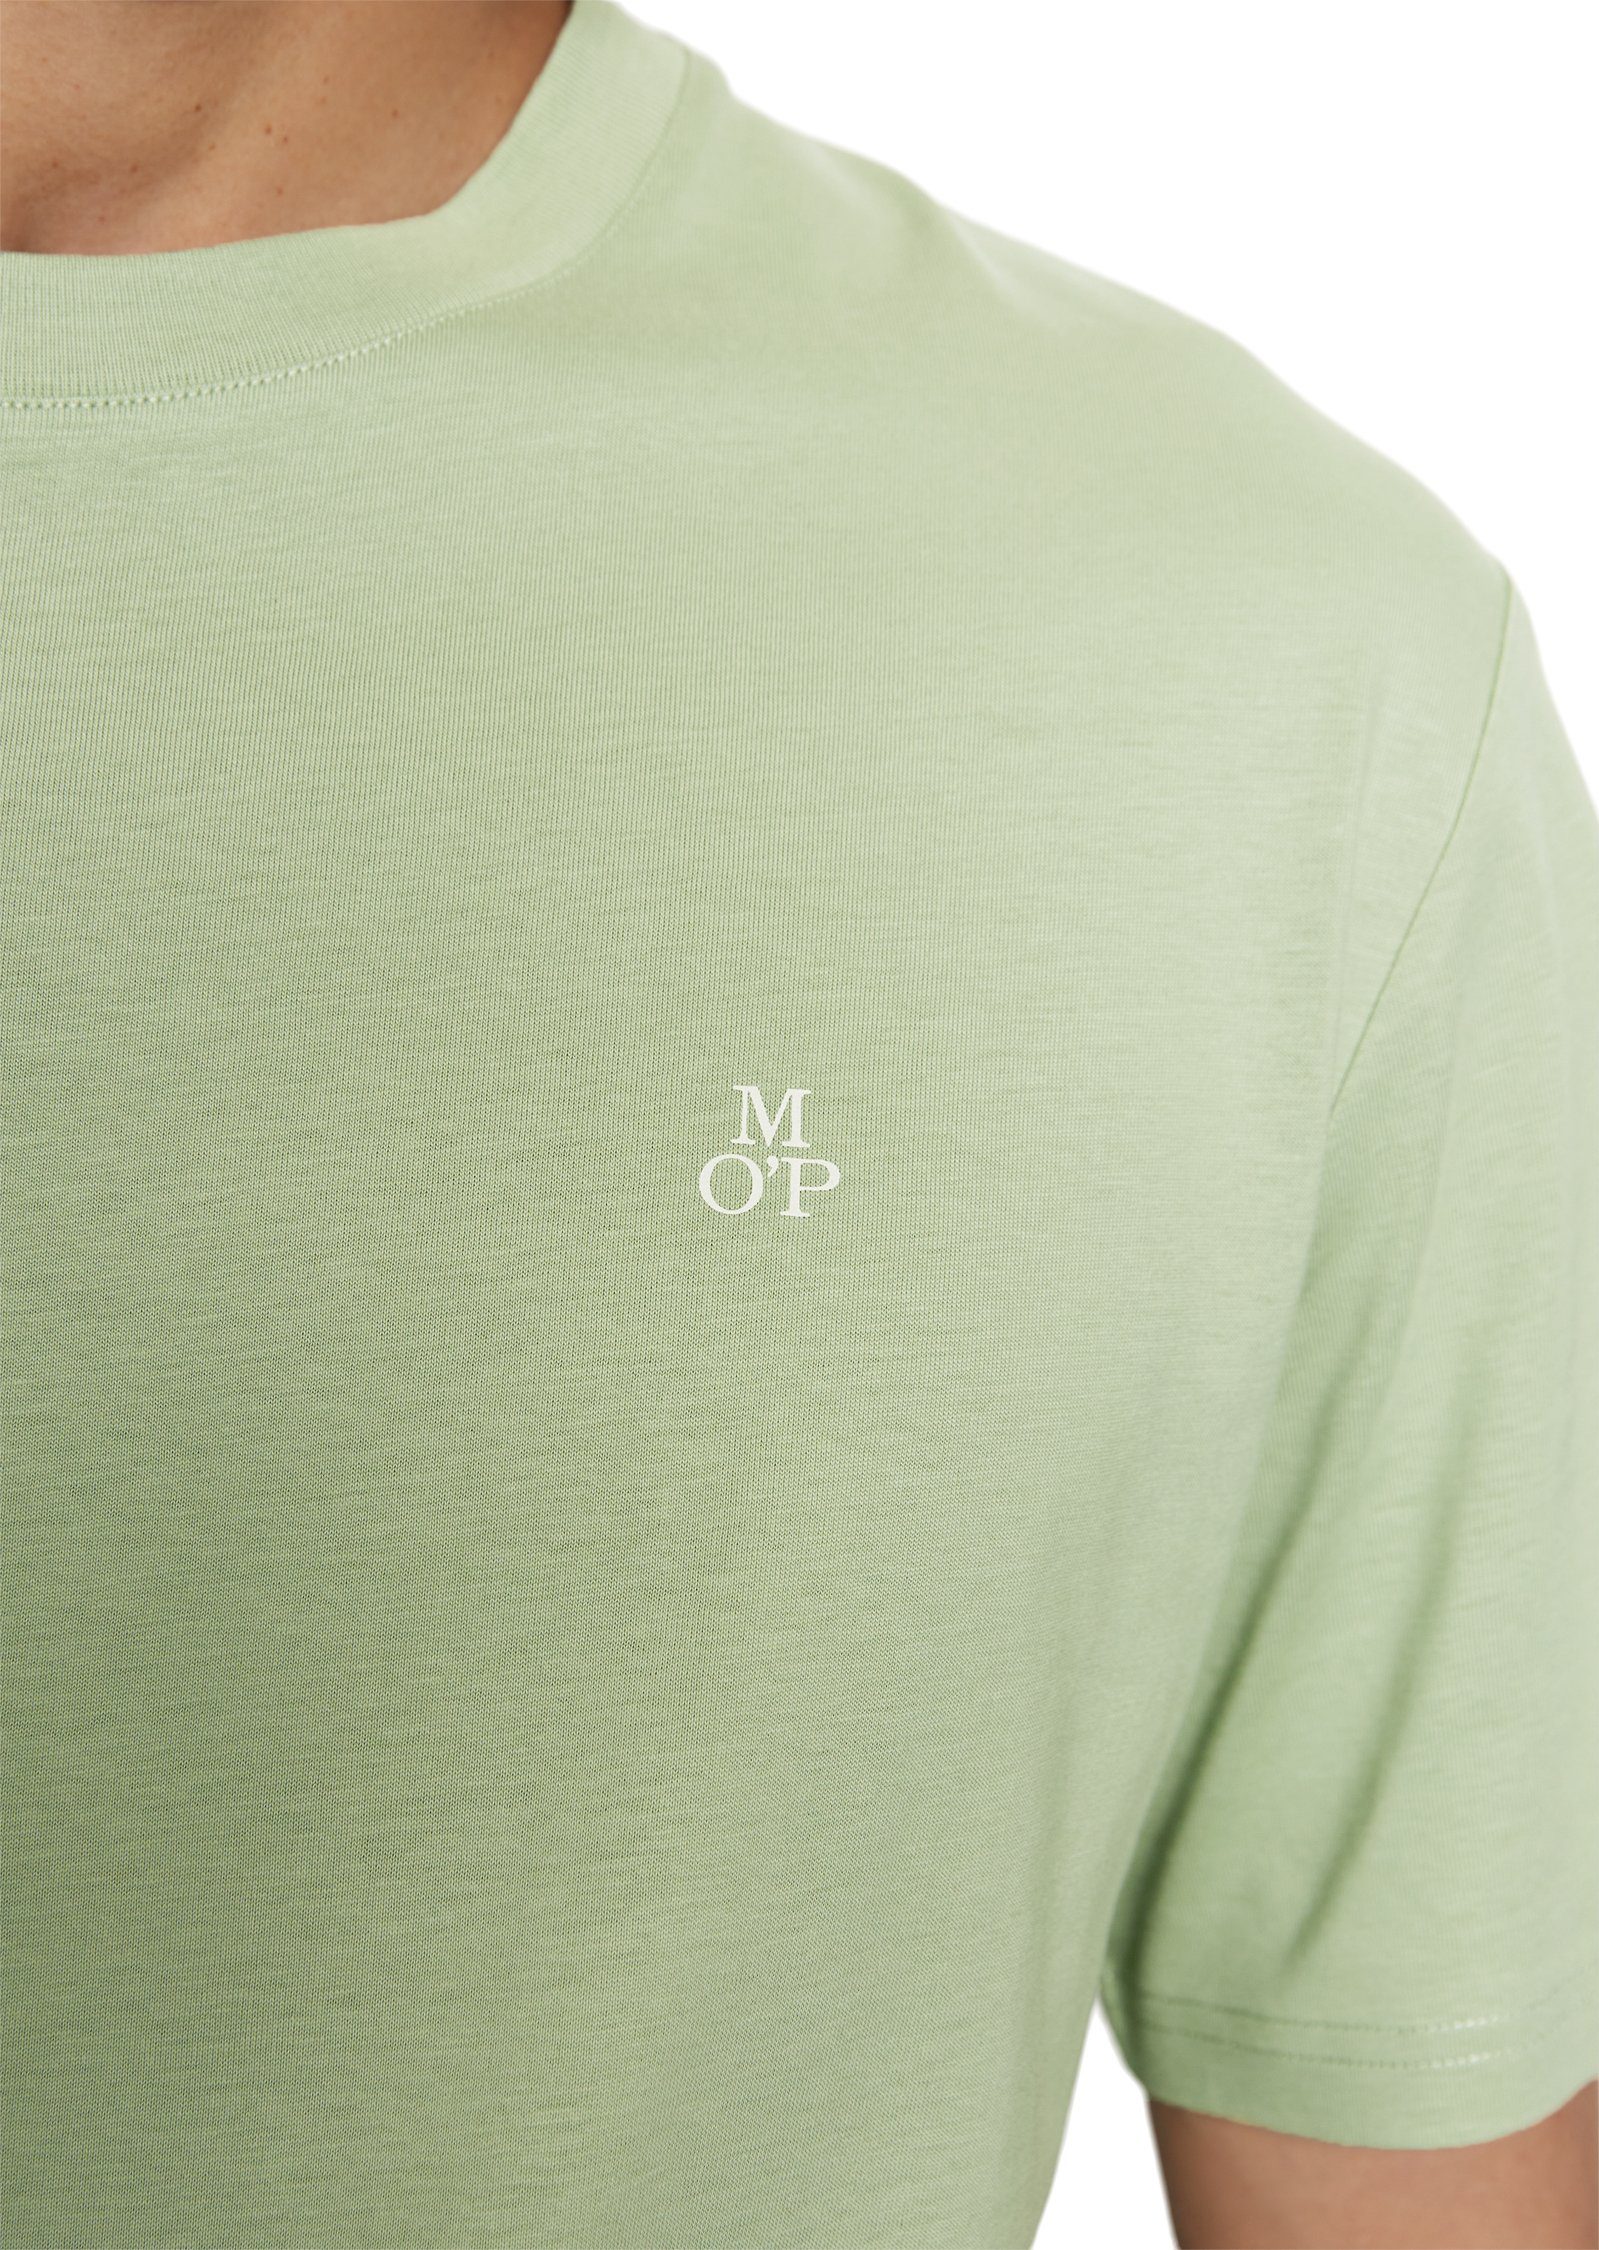 Marc O'Polo T-Shirt print, sleeve, T-shirt, rainee logo collar ribbed short